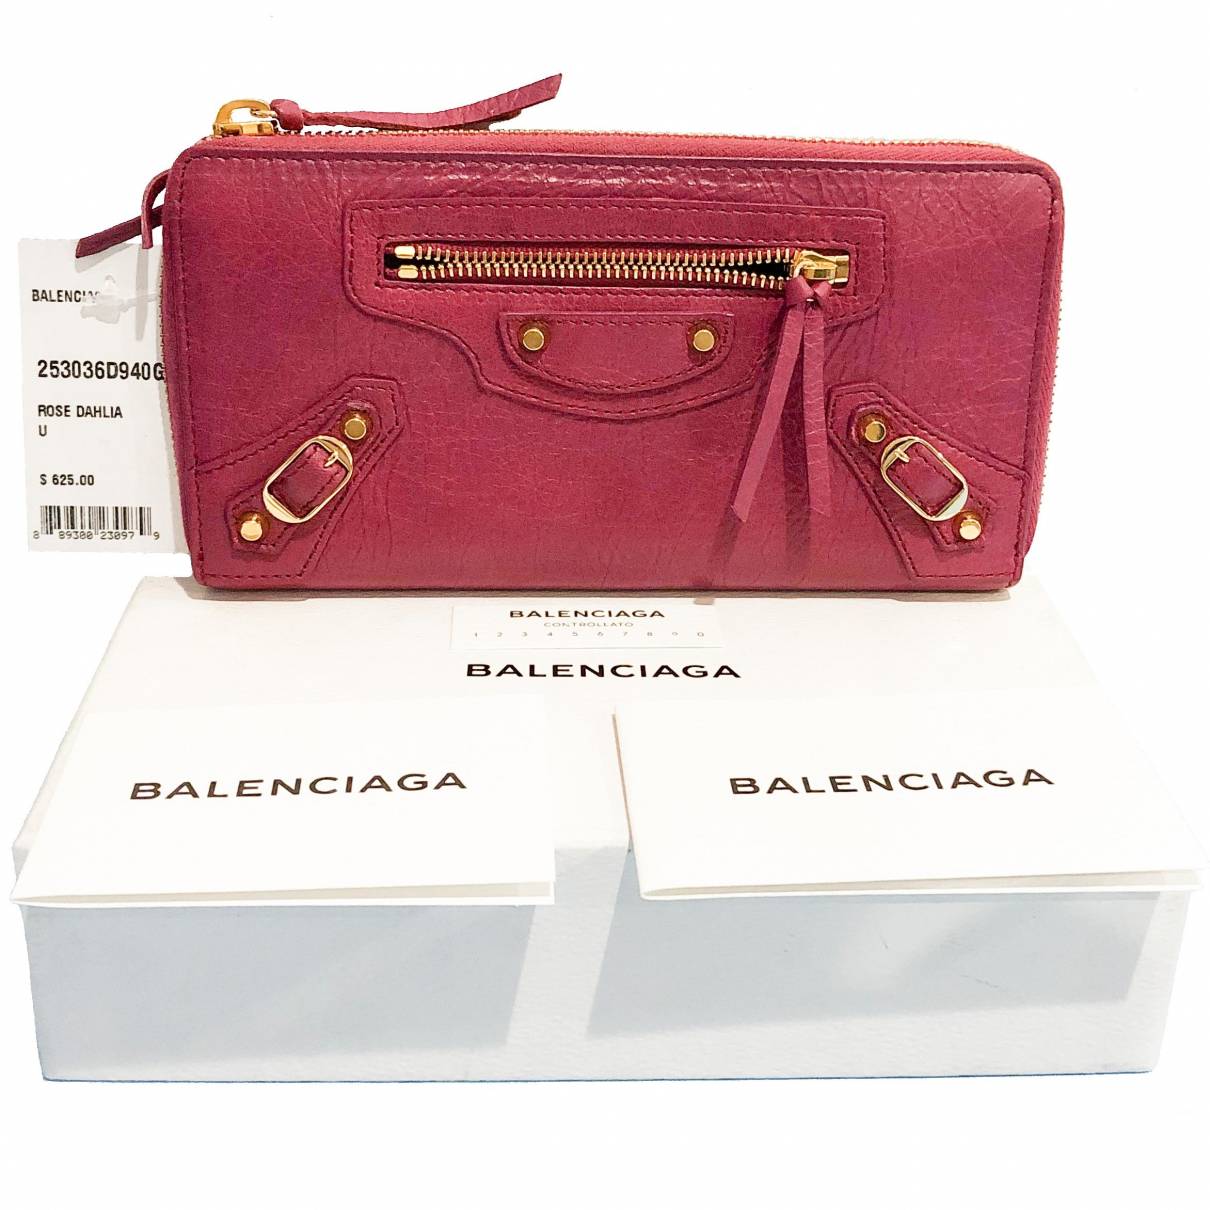 Buy Balenciaga Leather wallet online